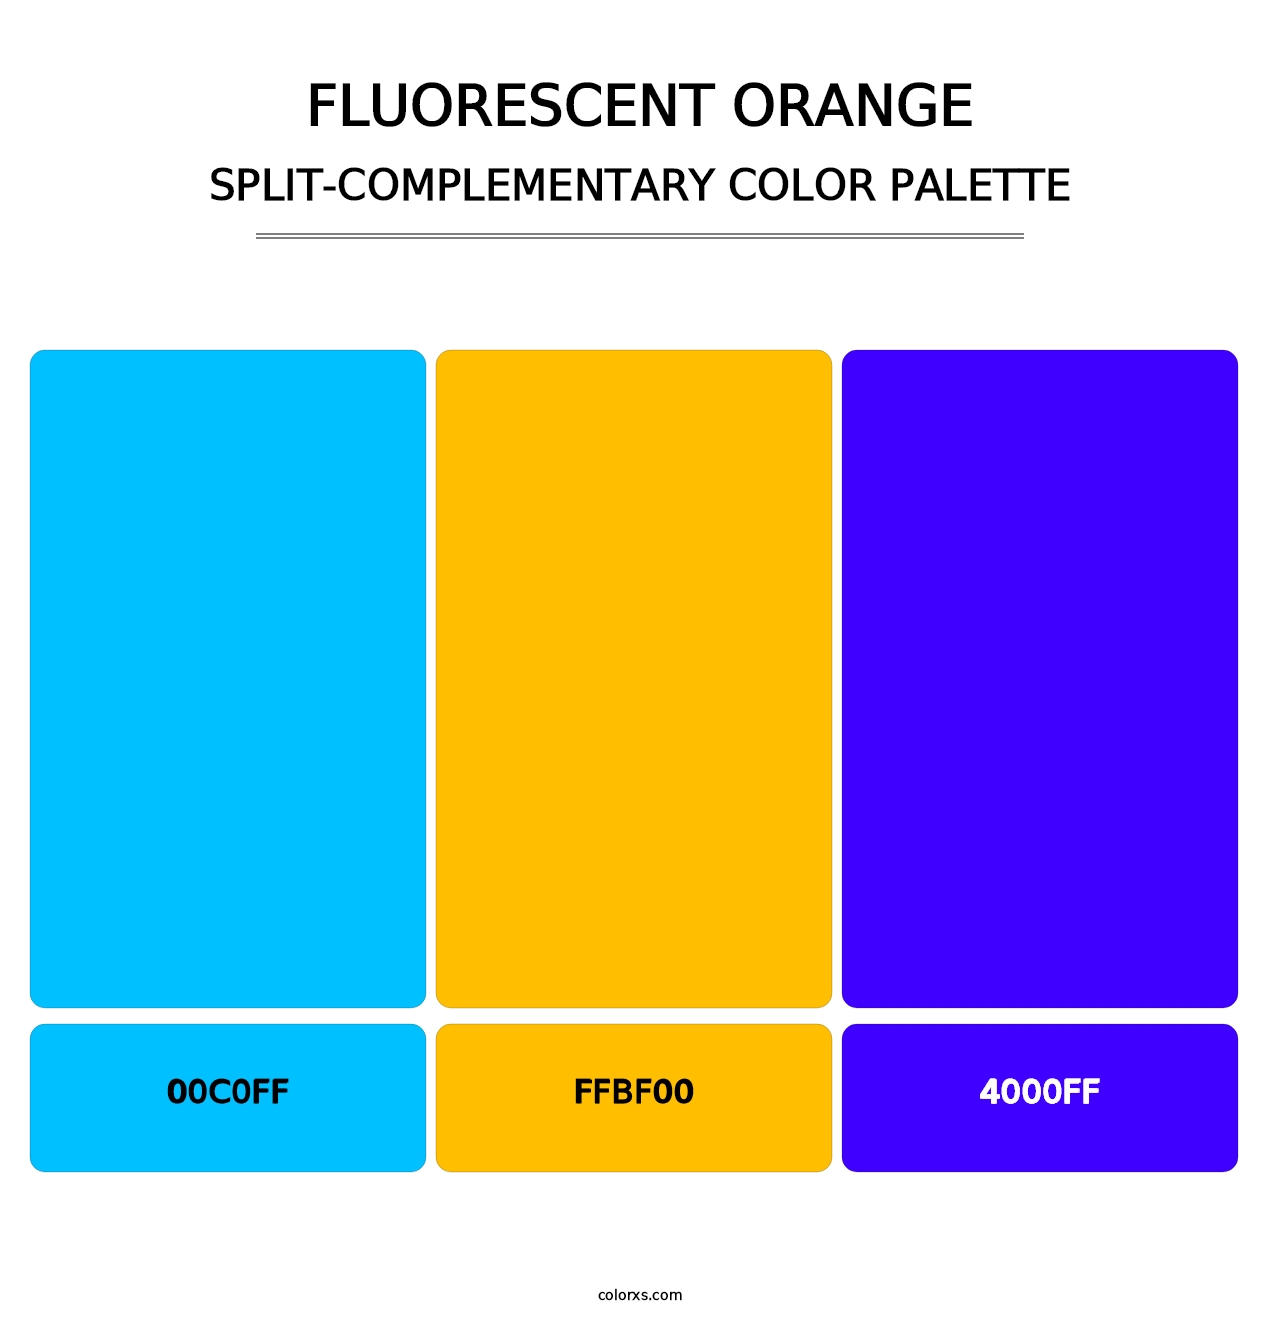 Fluorescent Orange - Split-Complementary Color Palette